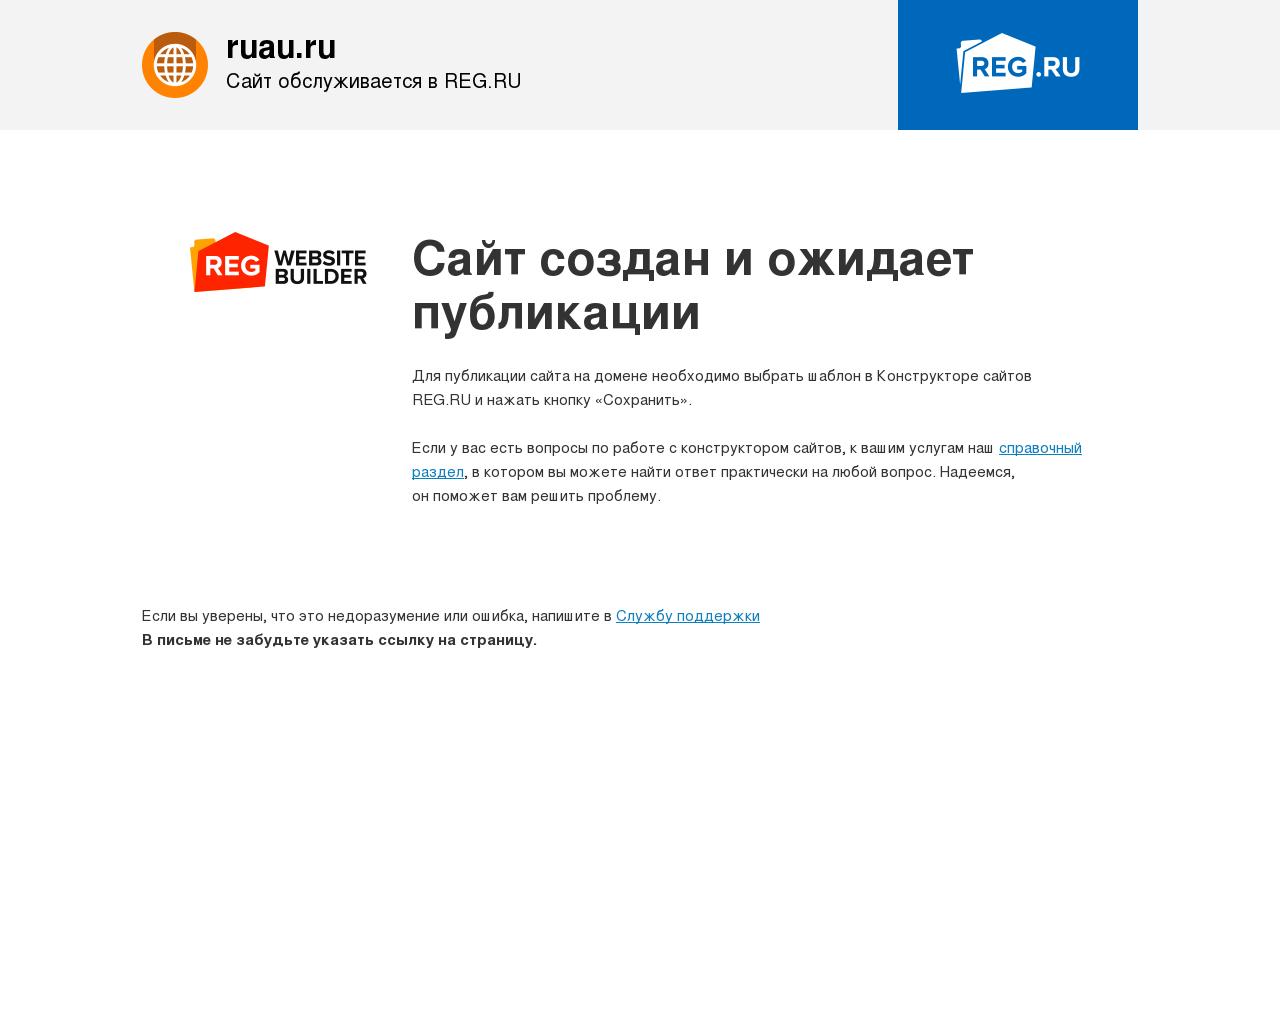 Изображение сайта ruau.ru в разрешении 1280x1024